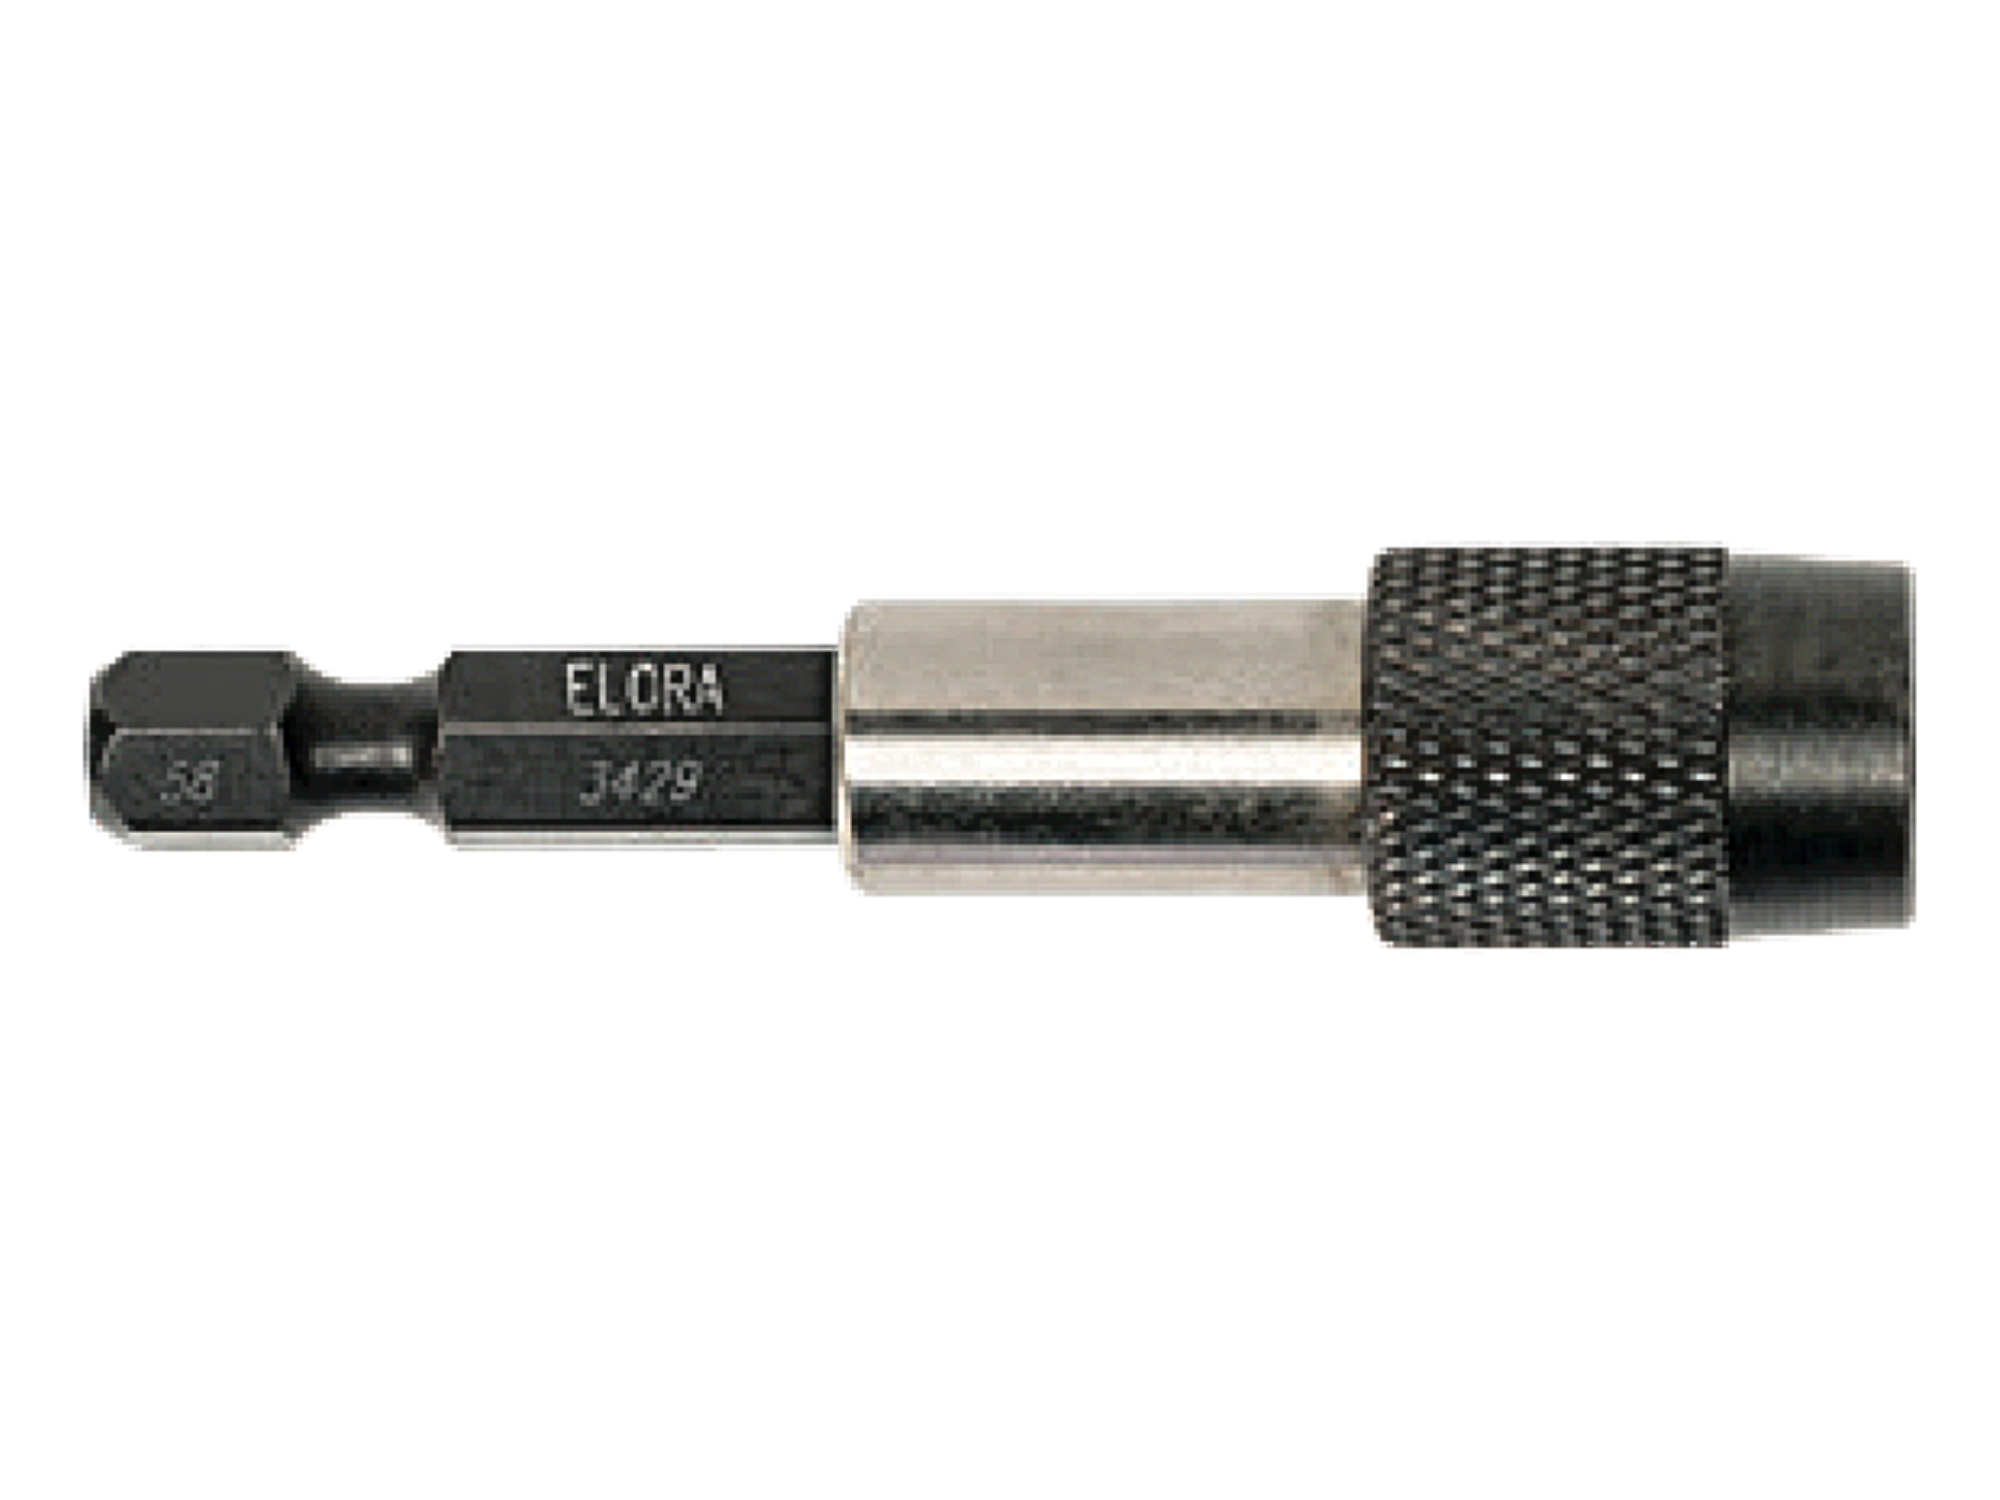 ELORA 3429 Bit holder 1/4" Strong Permanent Magnet (ELORA Tools) - Premium Bit Holder from ELORA - Shop now at Yew Aik.